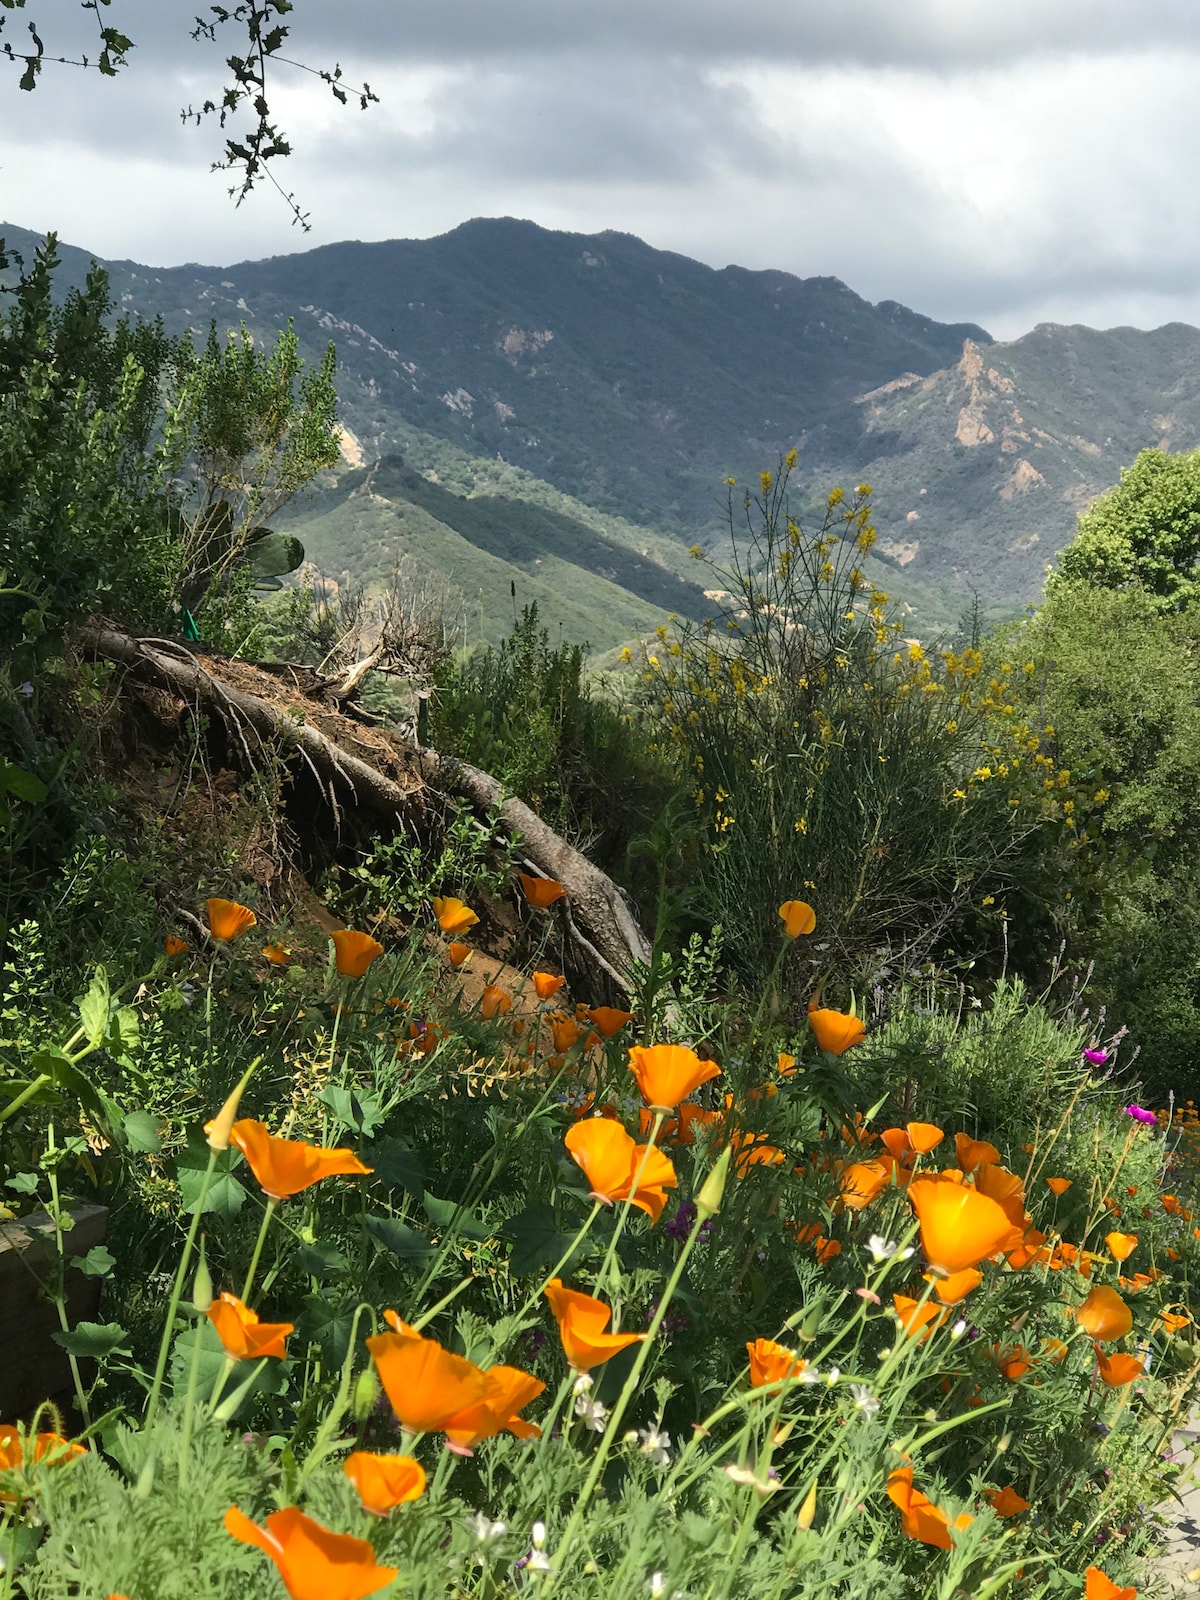 Saddle Peak Vacation Rentals & Homes - California, United States | Airbnb